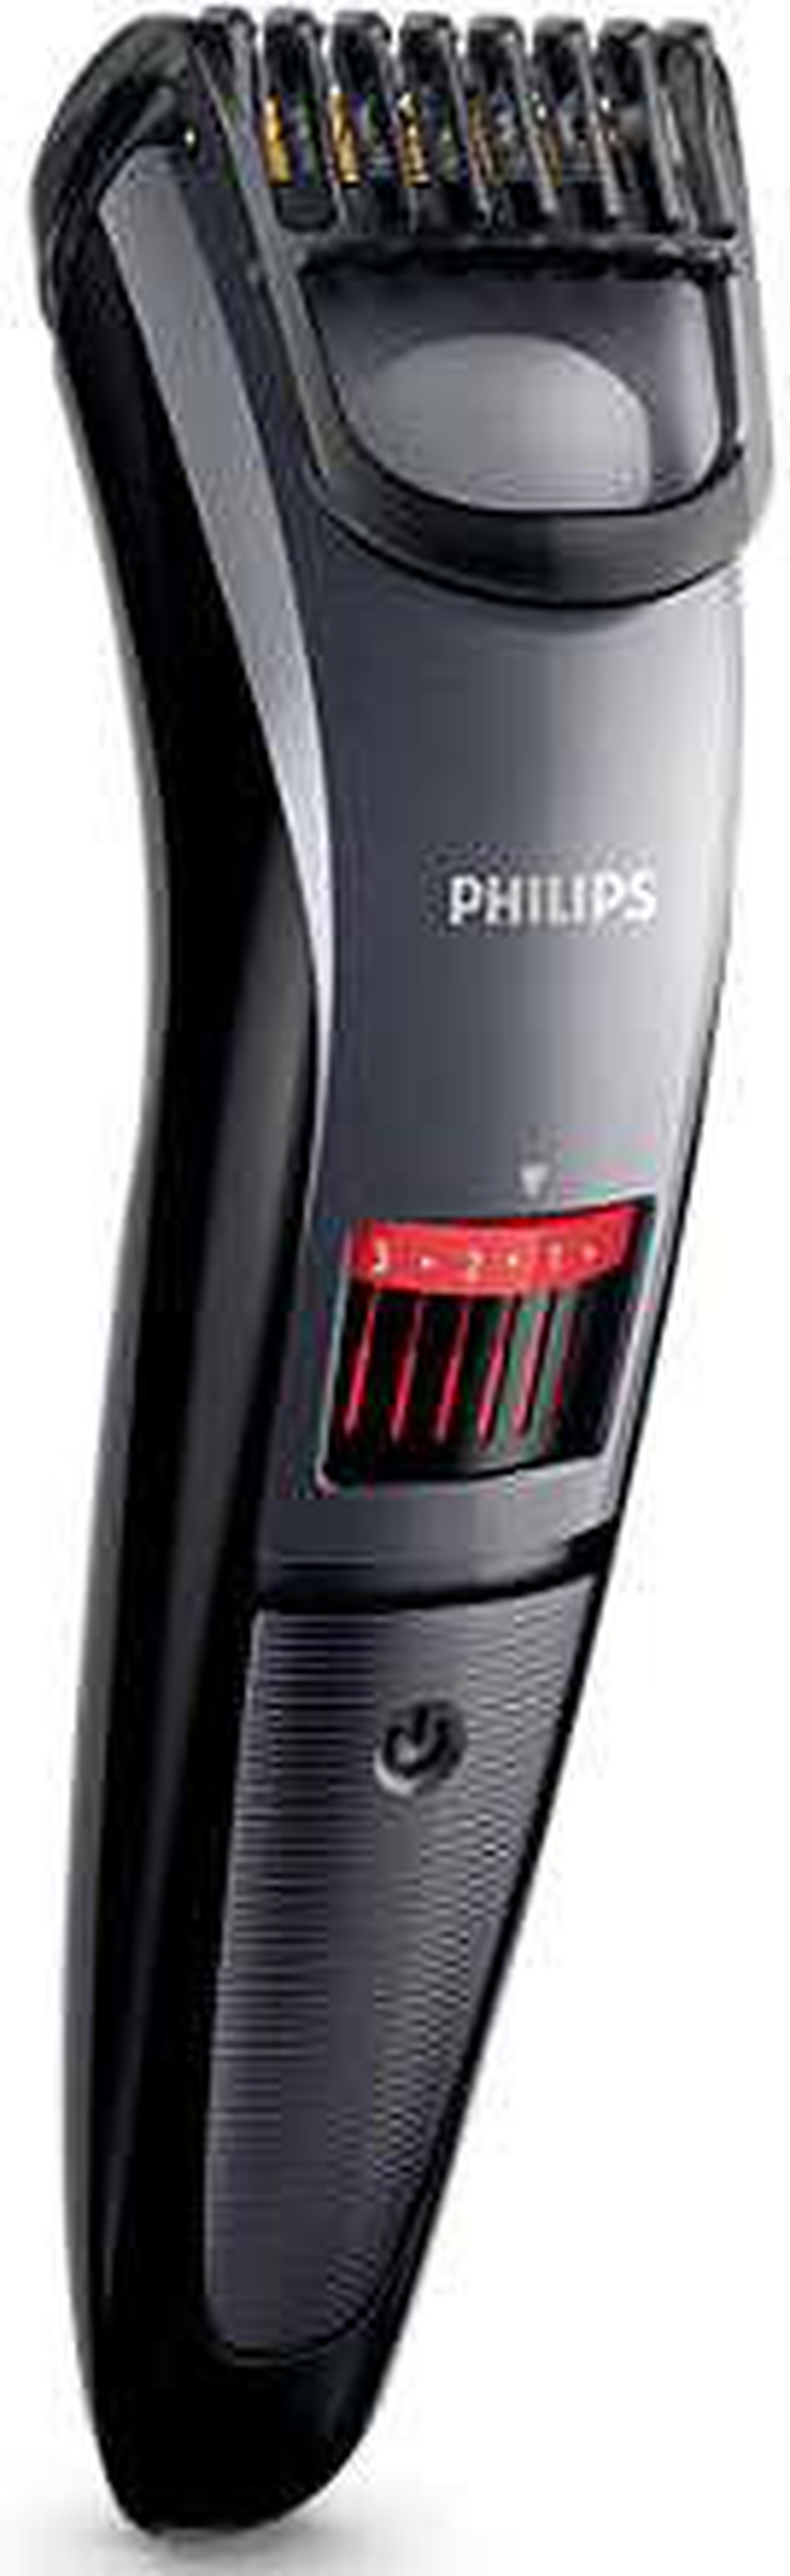 Машинка для стрижки Philips QT4015/15 черный (насадок в компл:1шт) фото